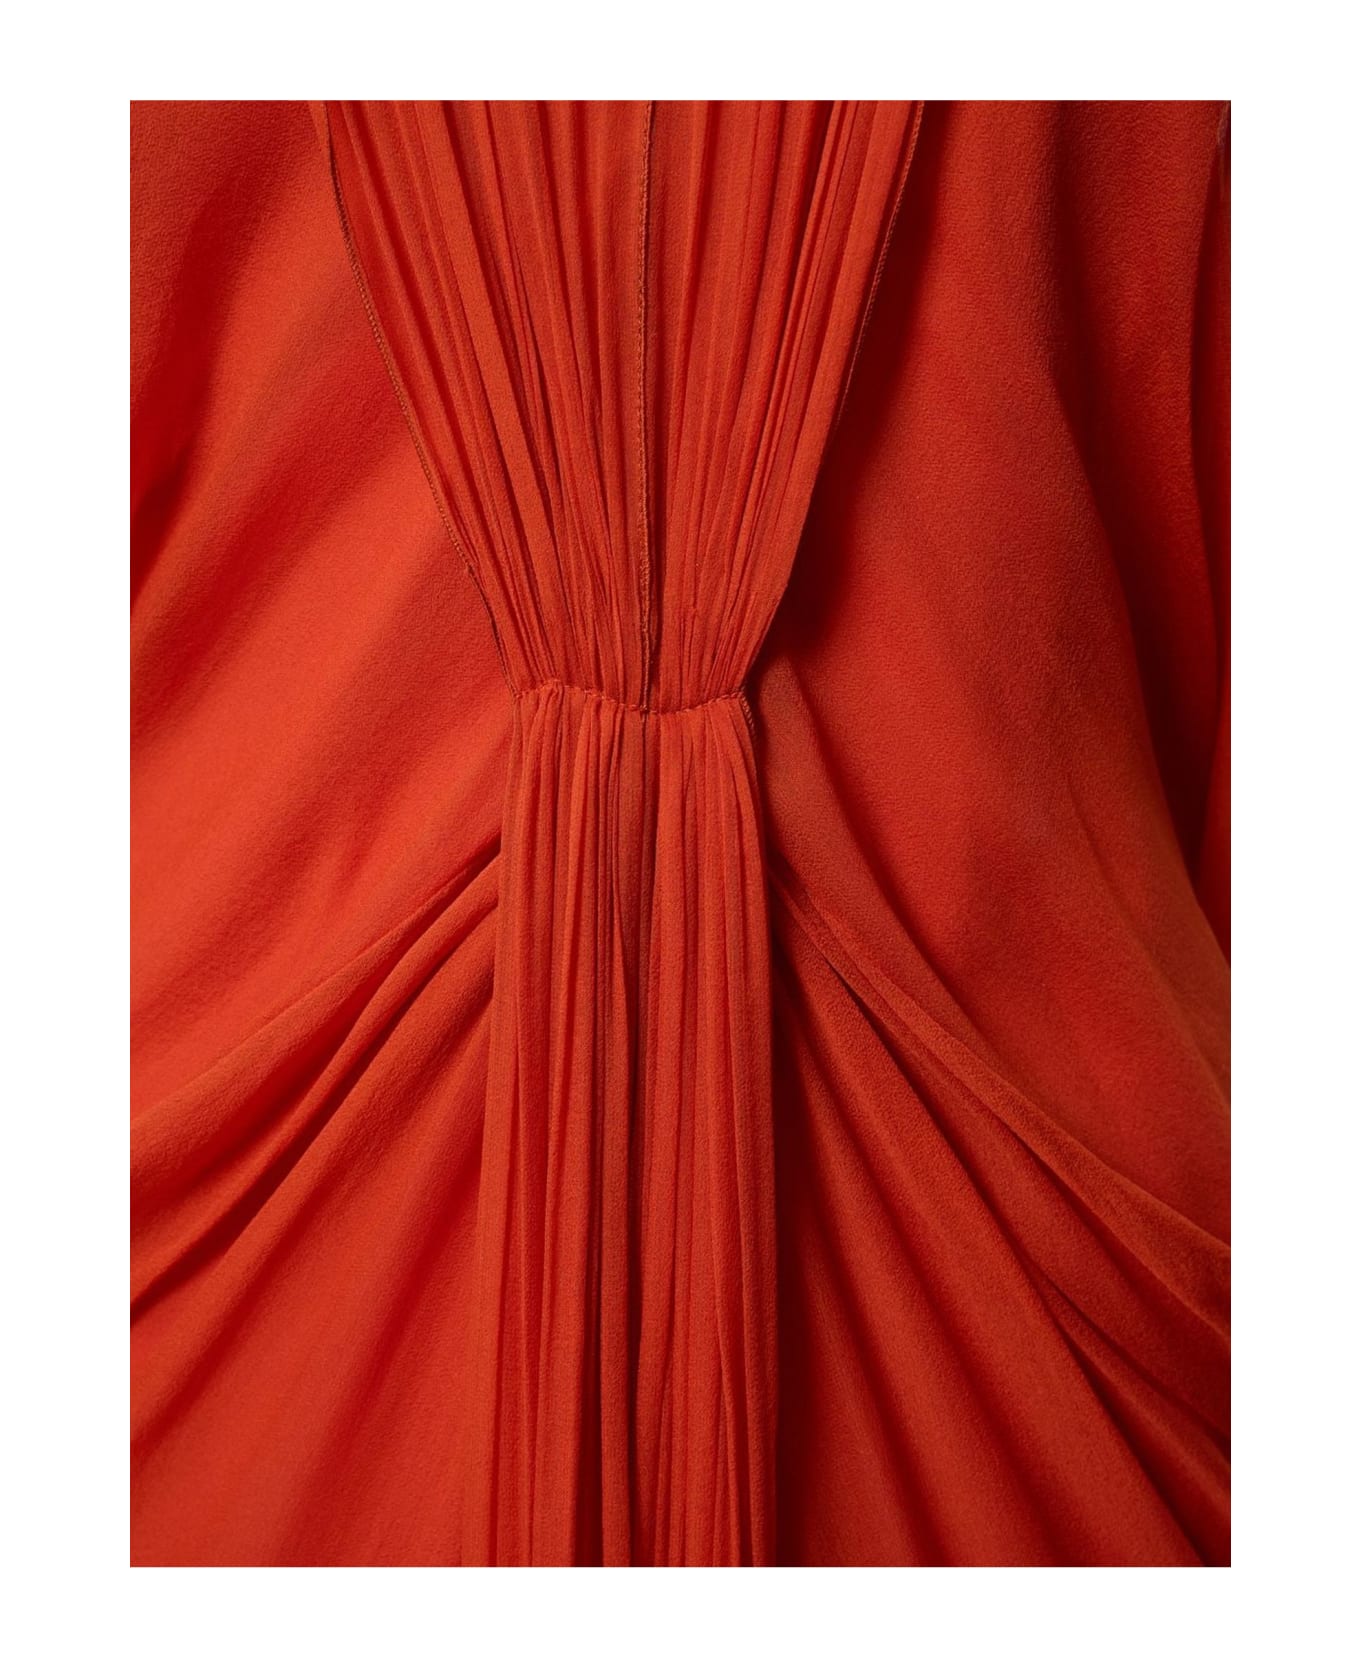 Alberta Ferretti Dress In Organic Silk Chiffon - Orange